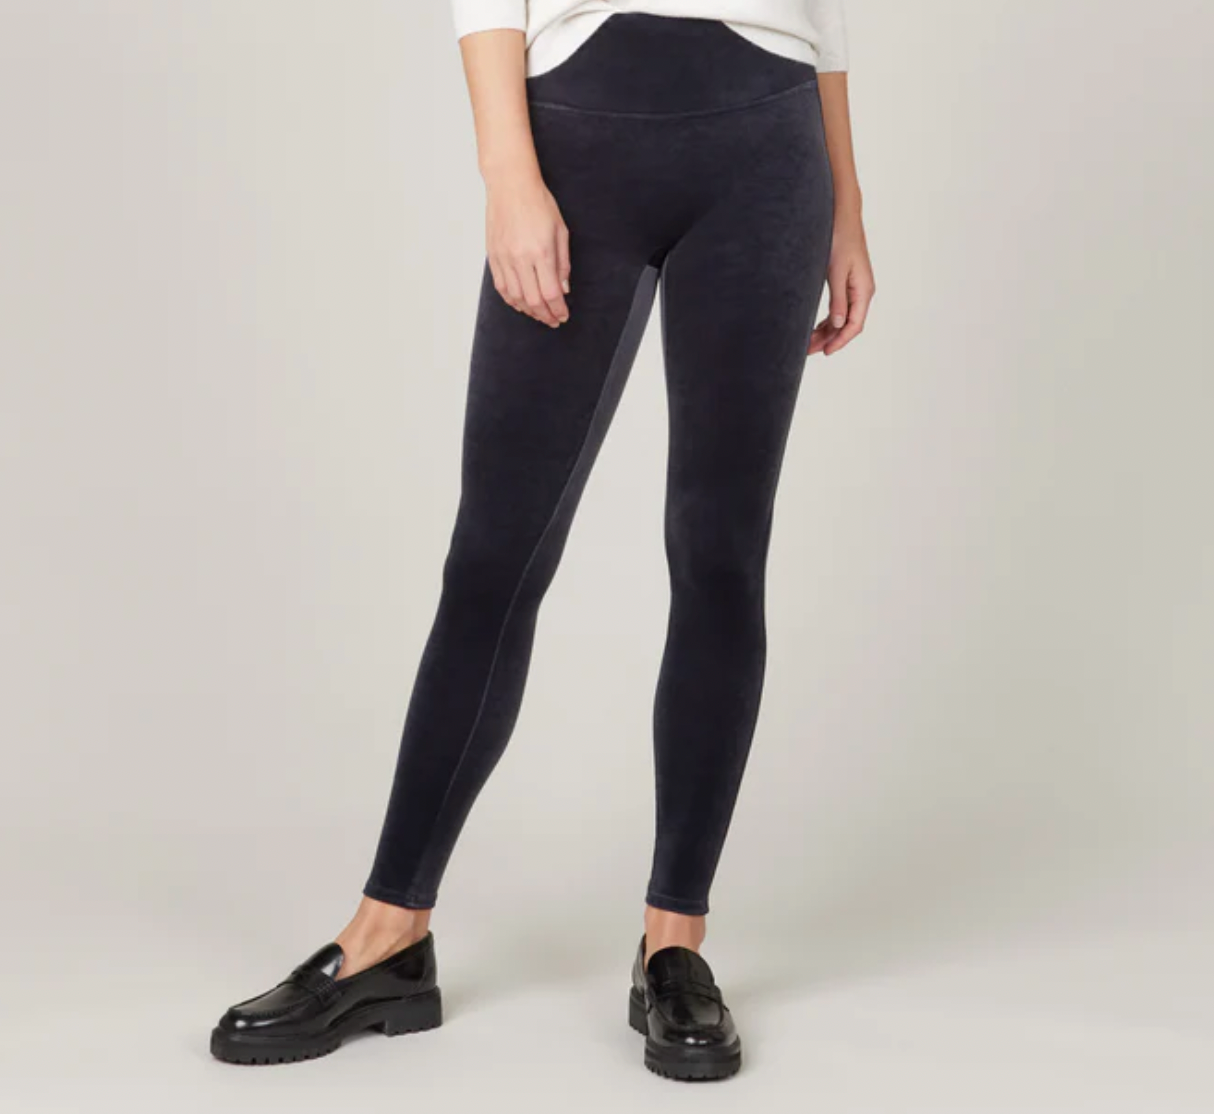 Spanx's Fan-Favorite Velvet Leggings Are Back in New Colors—Plus More  Fashionable Leggings to Shop